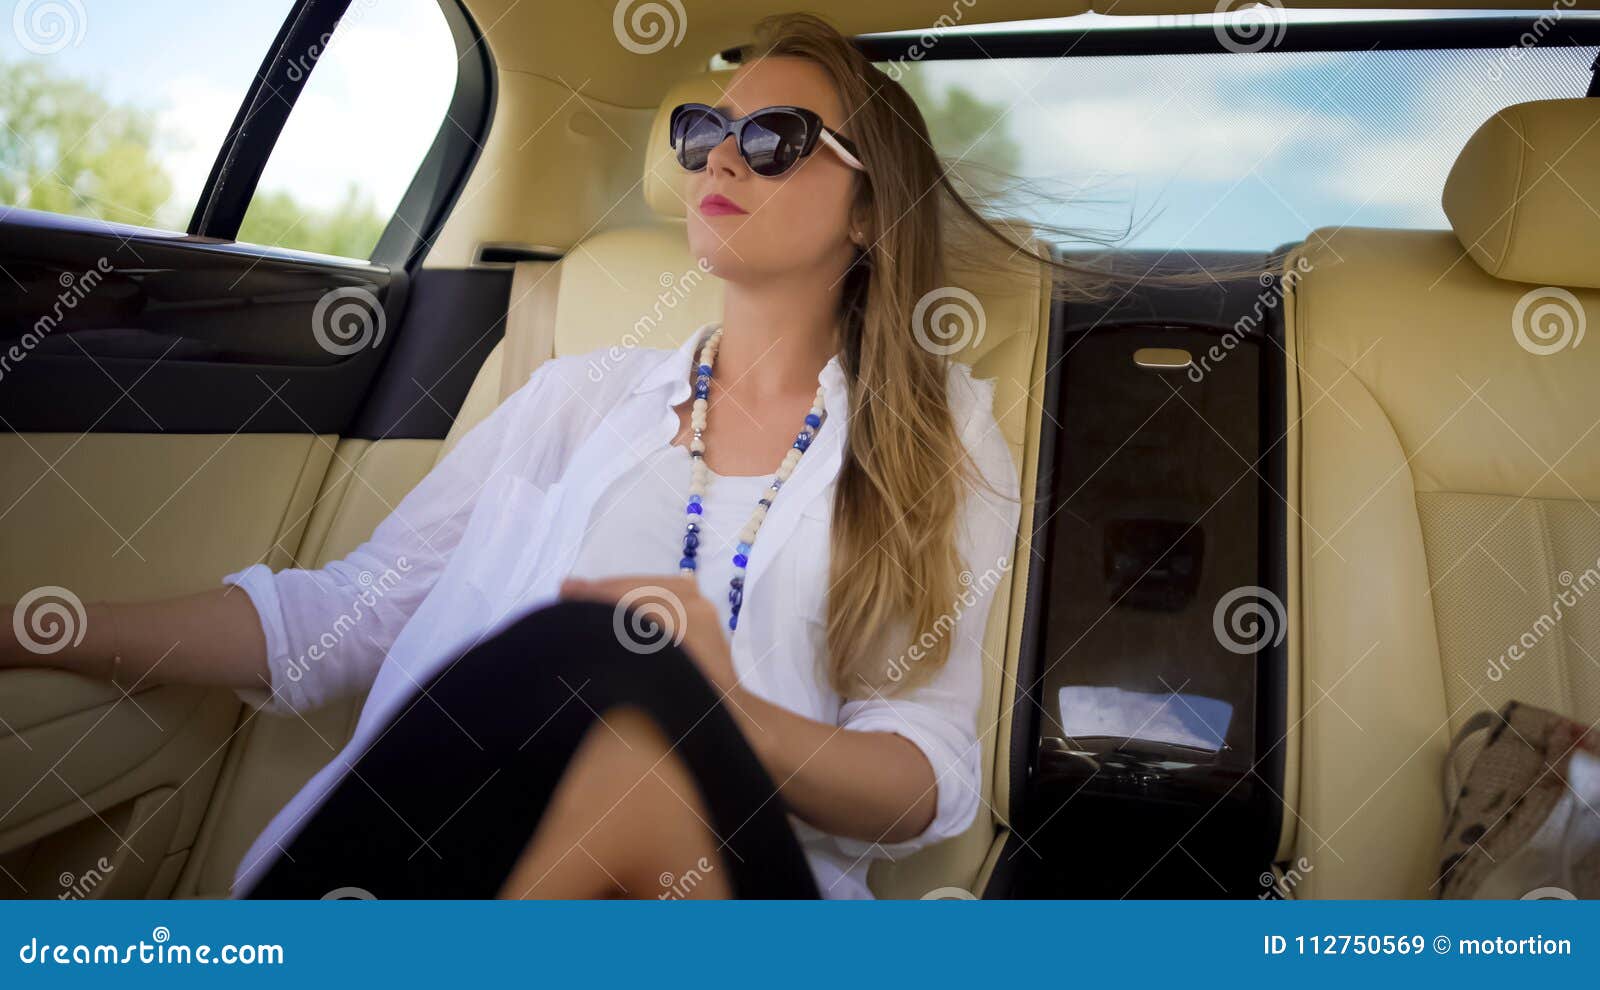 beautiful independent woman enjoying car trip on vacation, business traveler